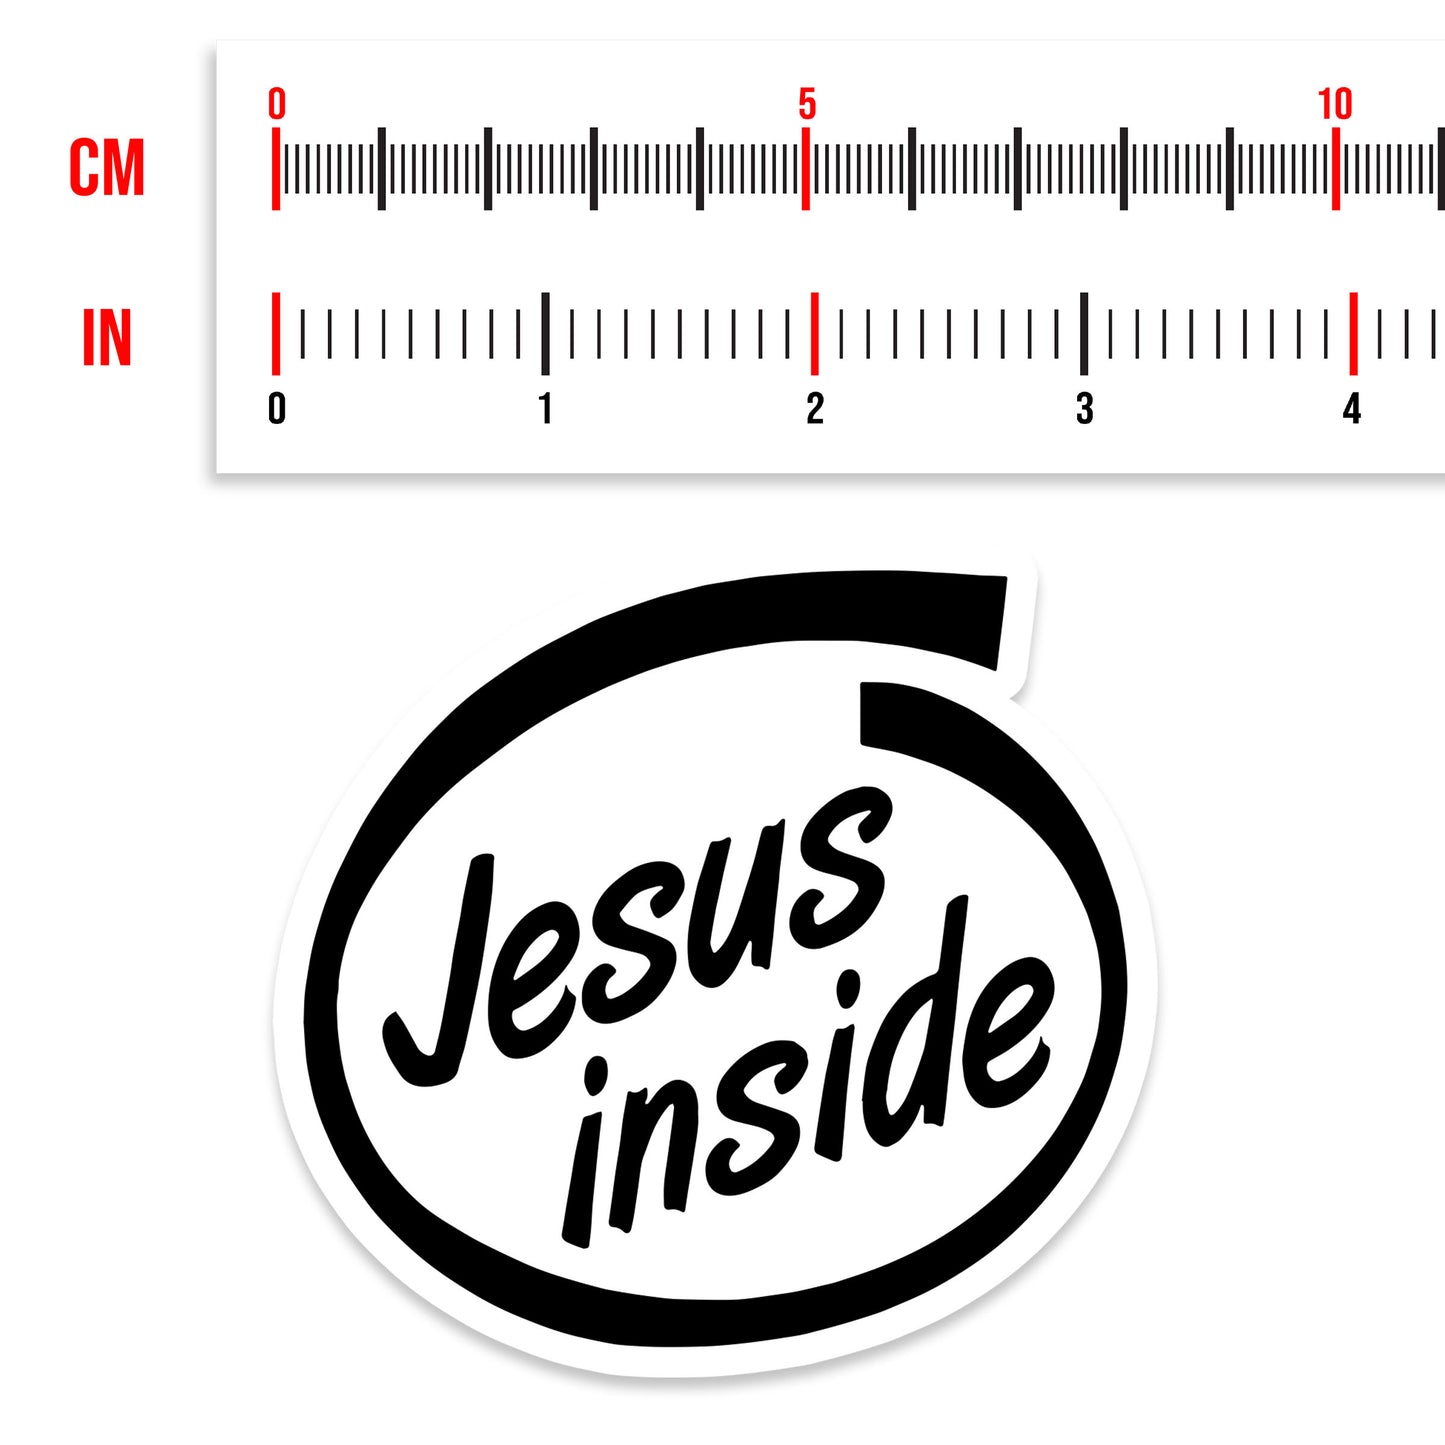 Jesus Inside Vinyl Sticker